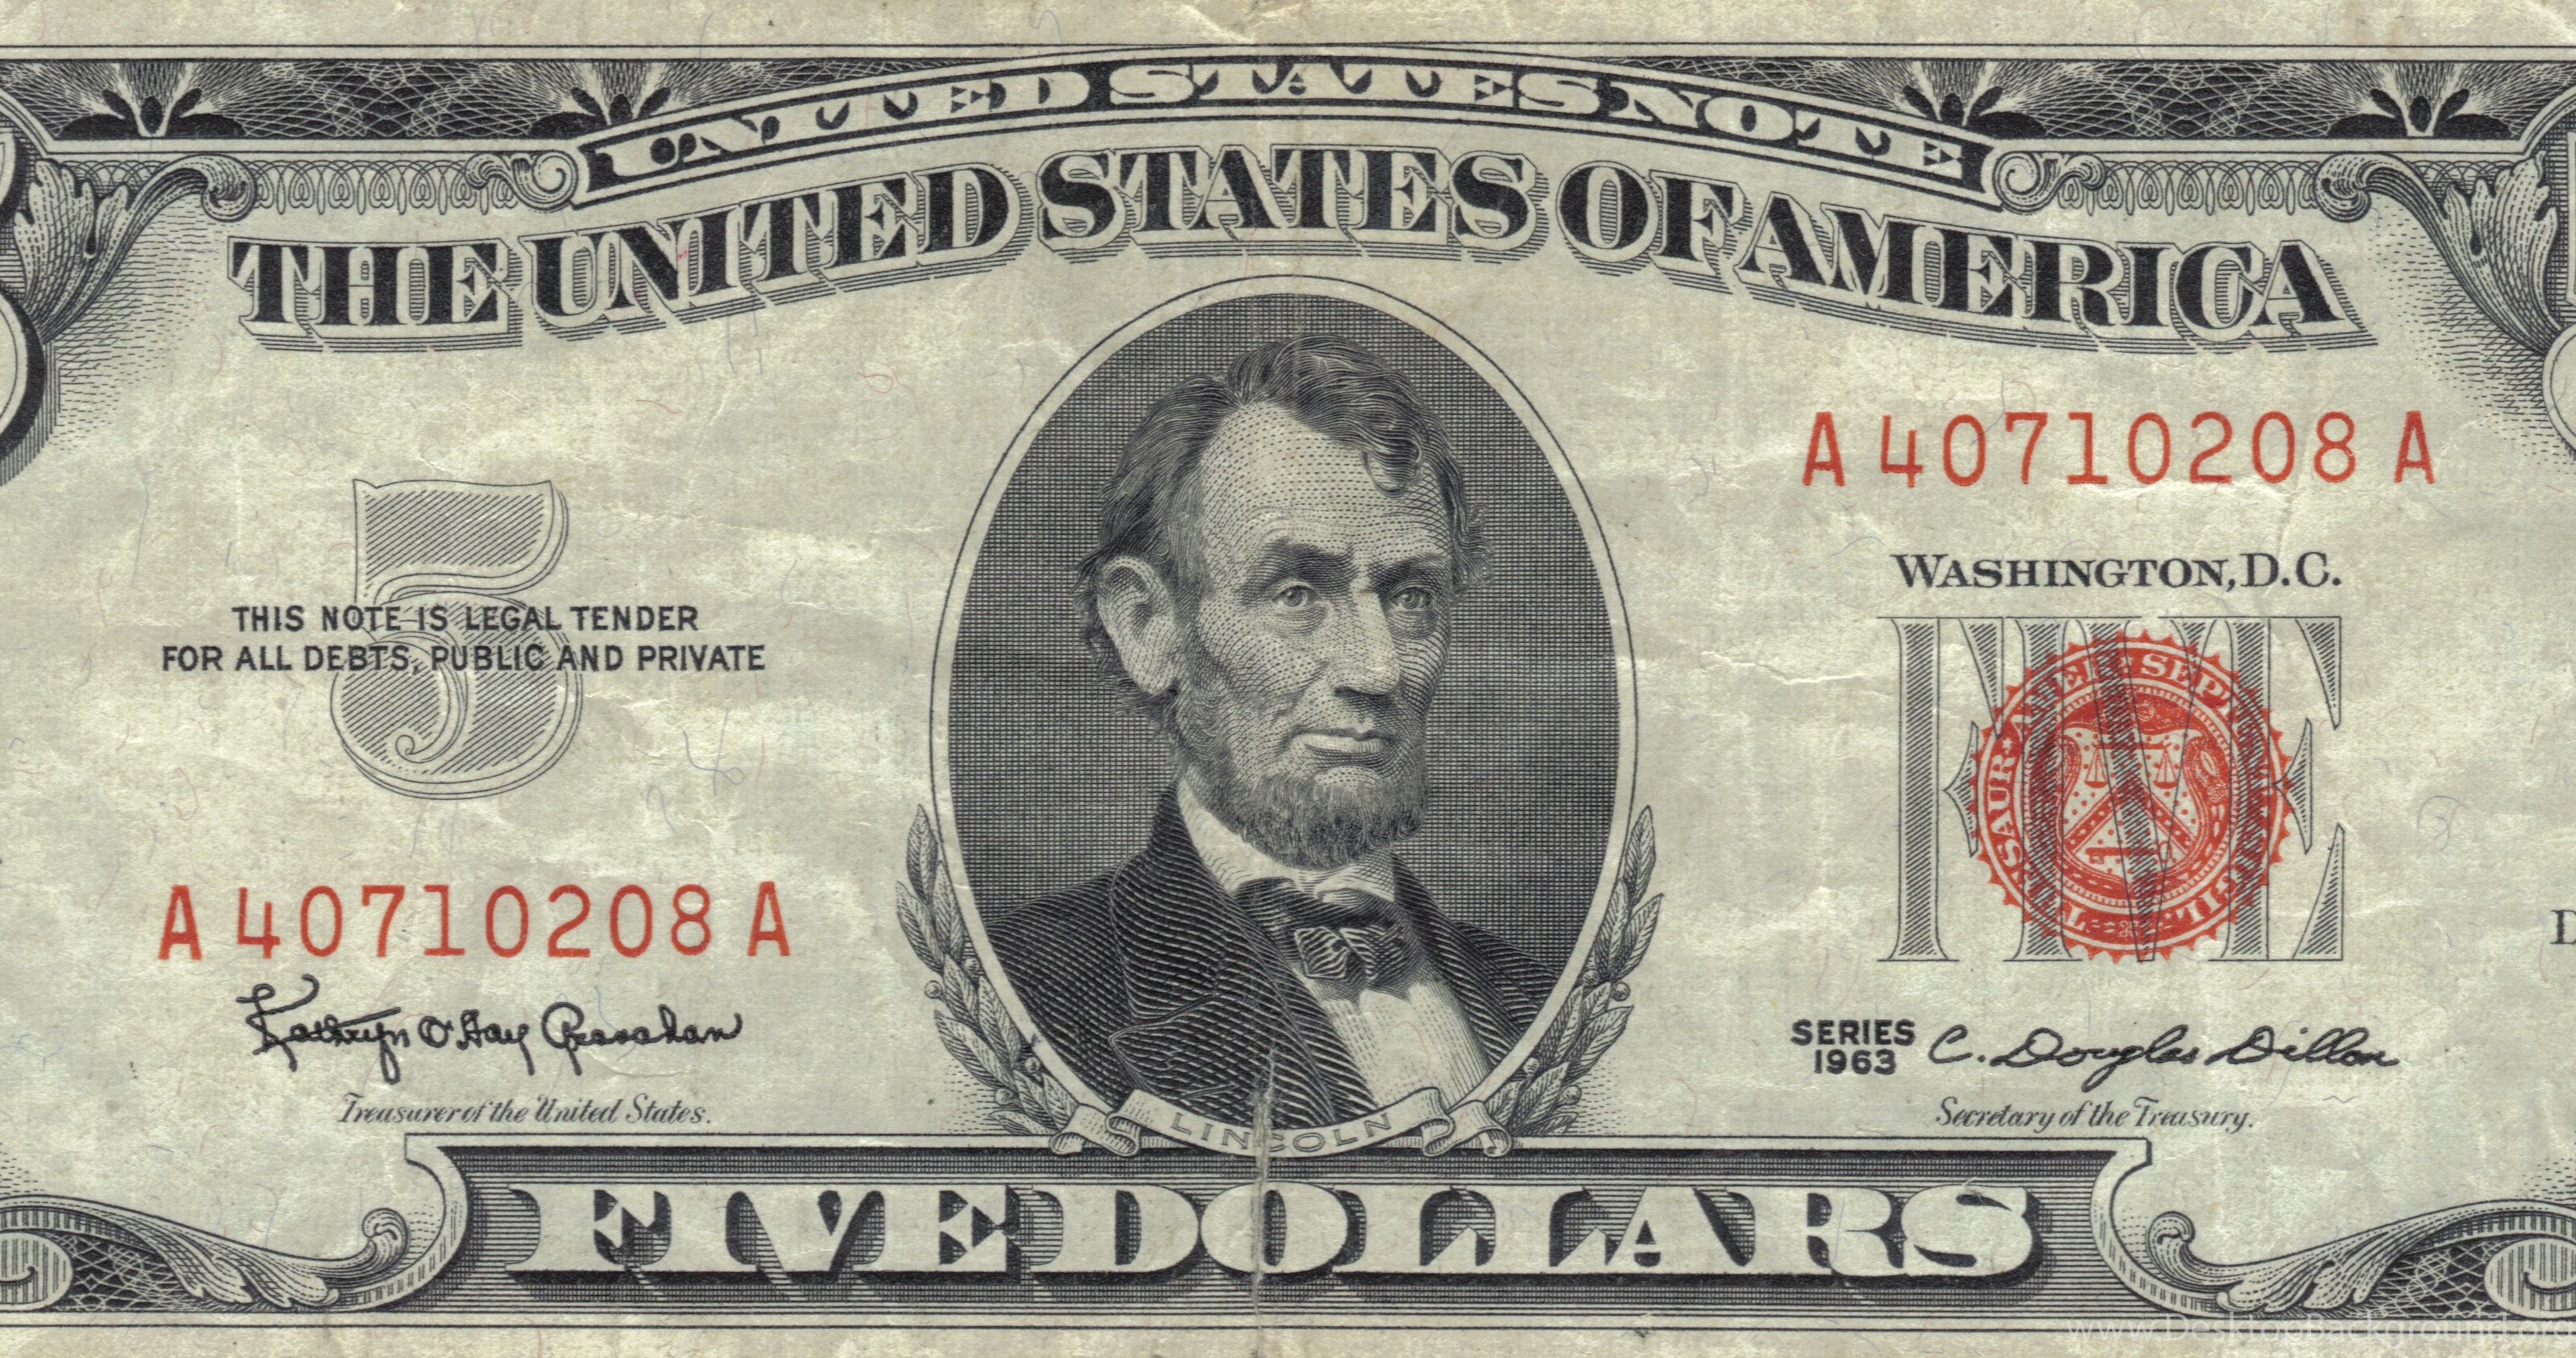 1 45 долларов. Пять долларов США. Банкнота пять долларов США 1963 года. 5 Долларов красного цвета. Is Note a legal tender.